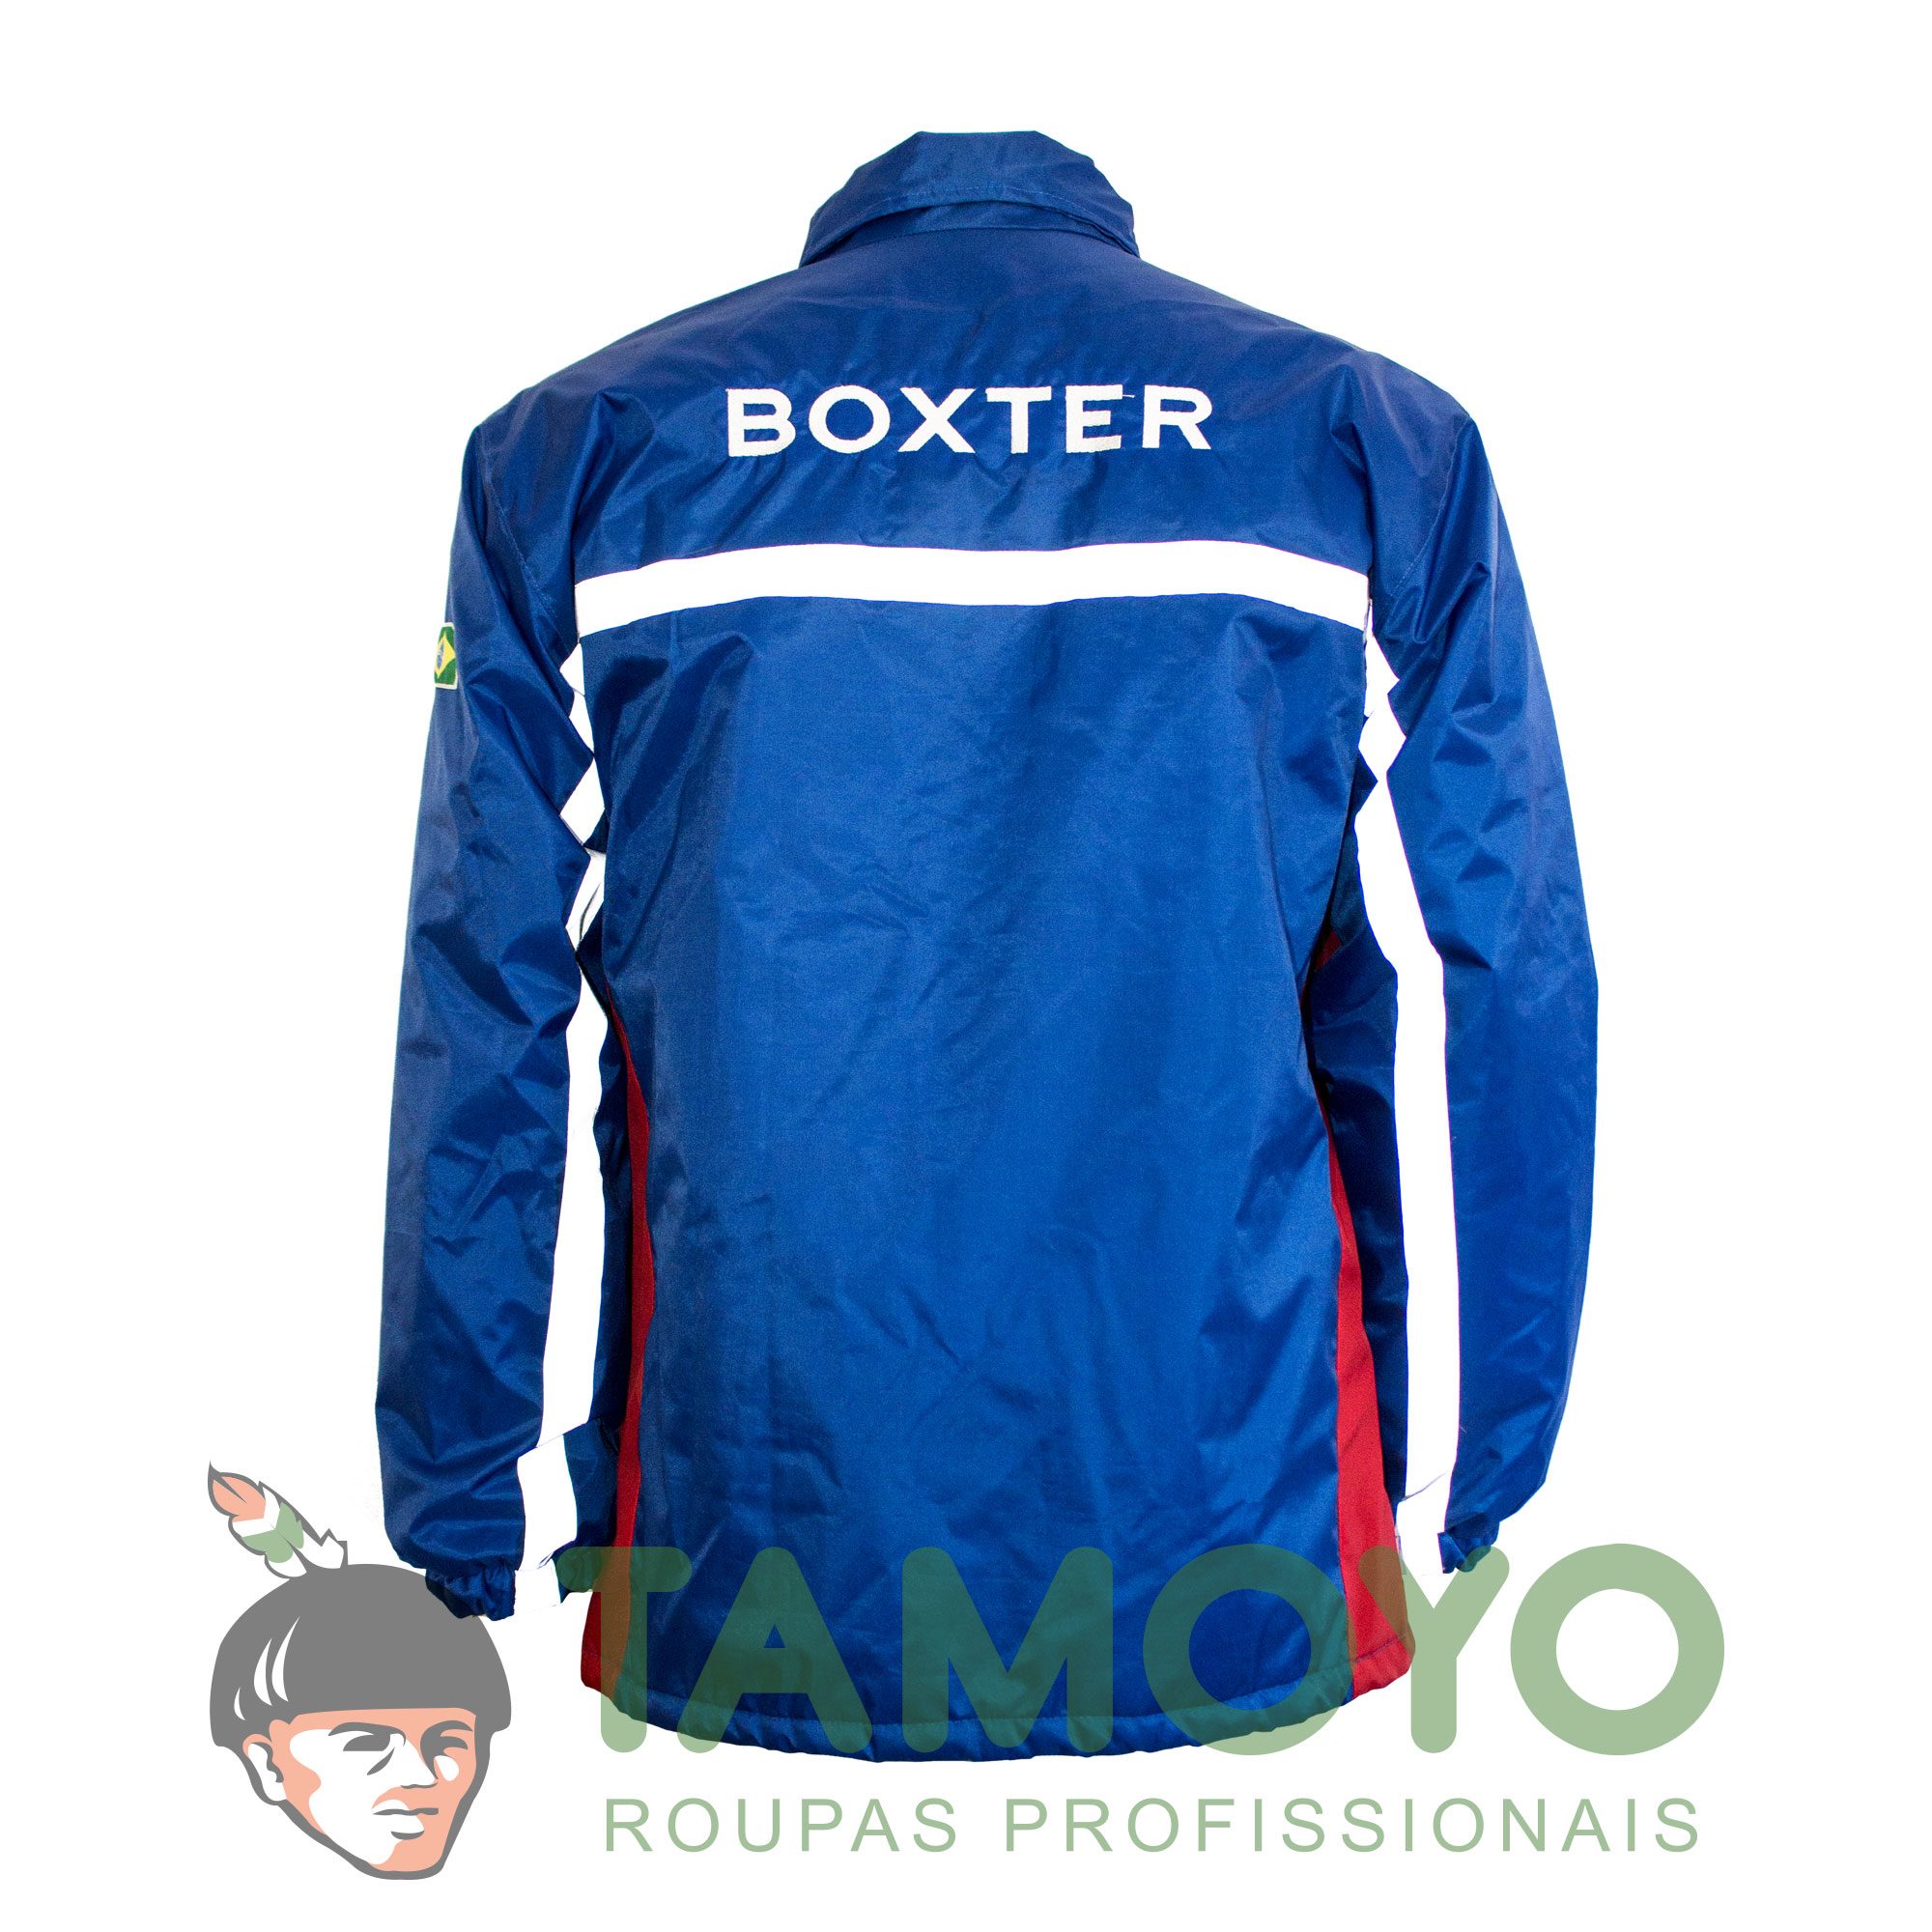 jaqueta-boxter-roupas-tamoyo-uniformes-profissionais-c